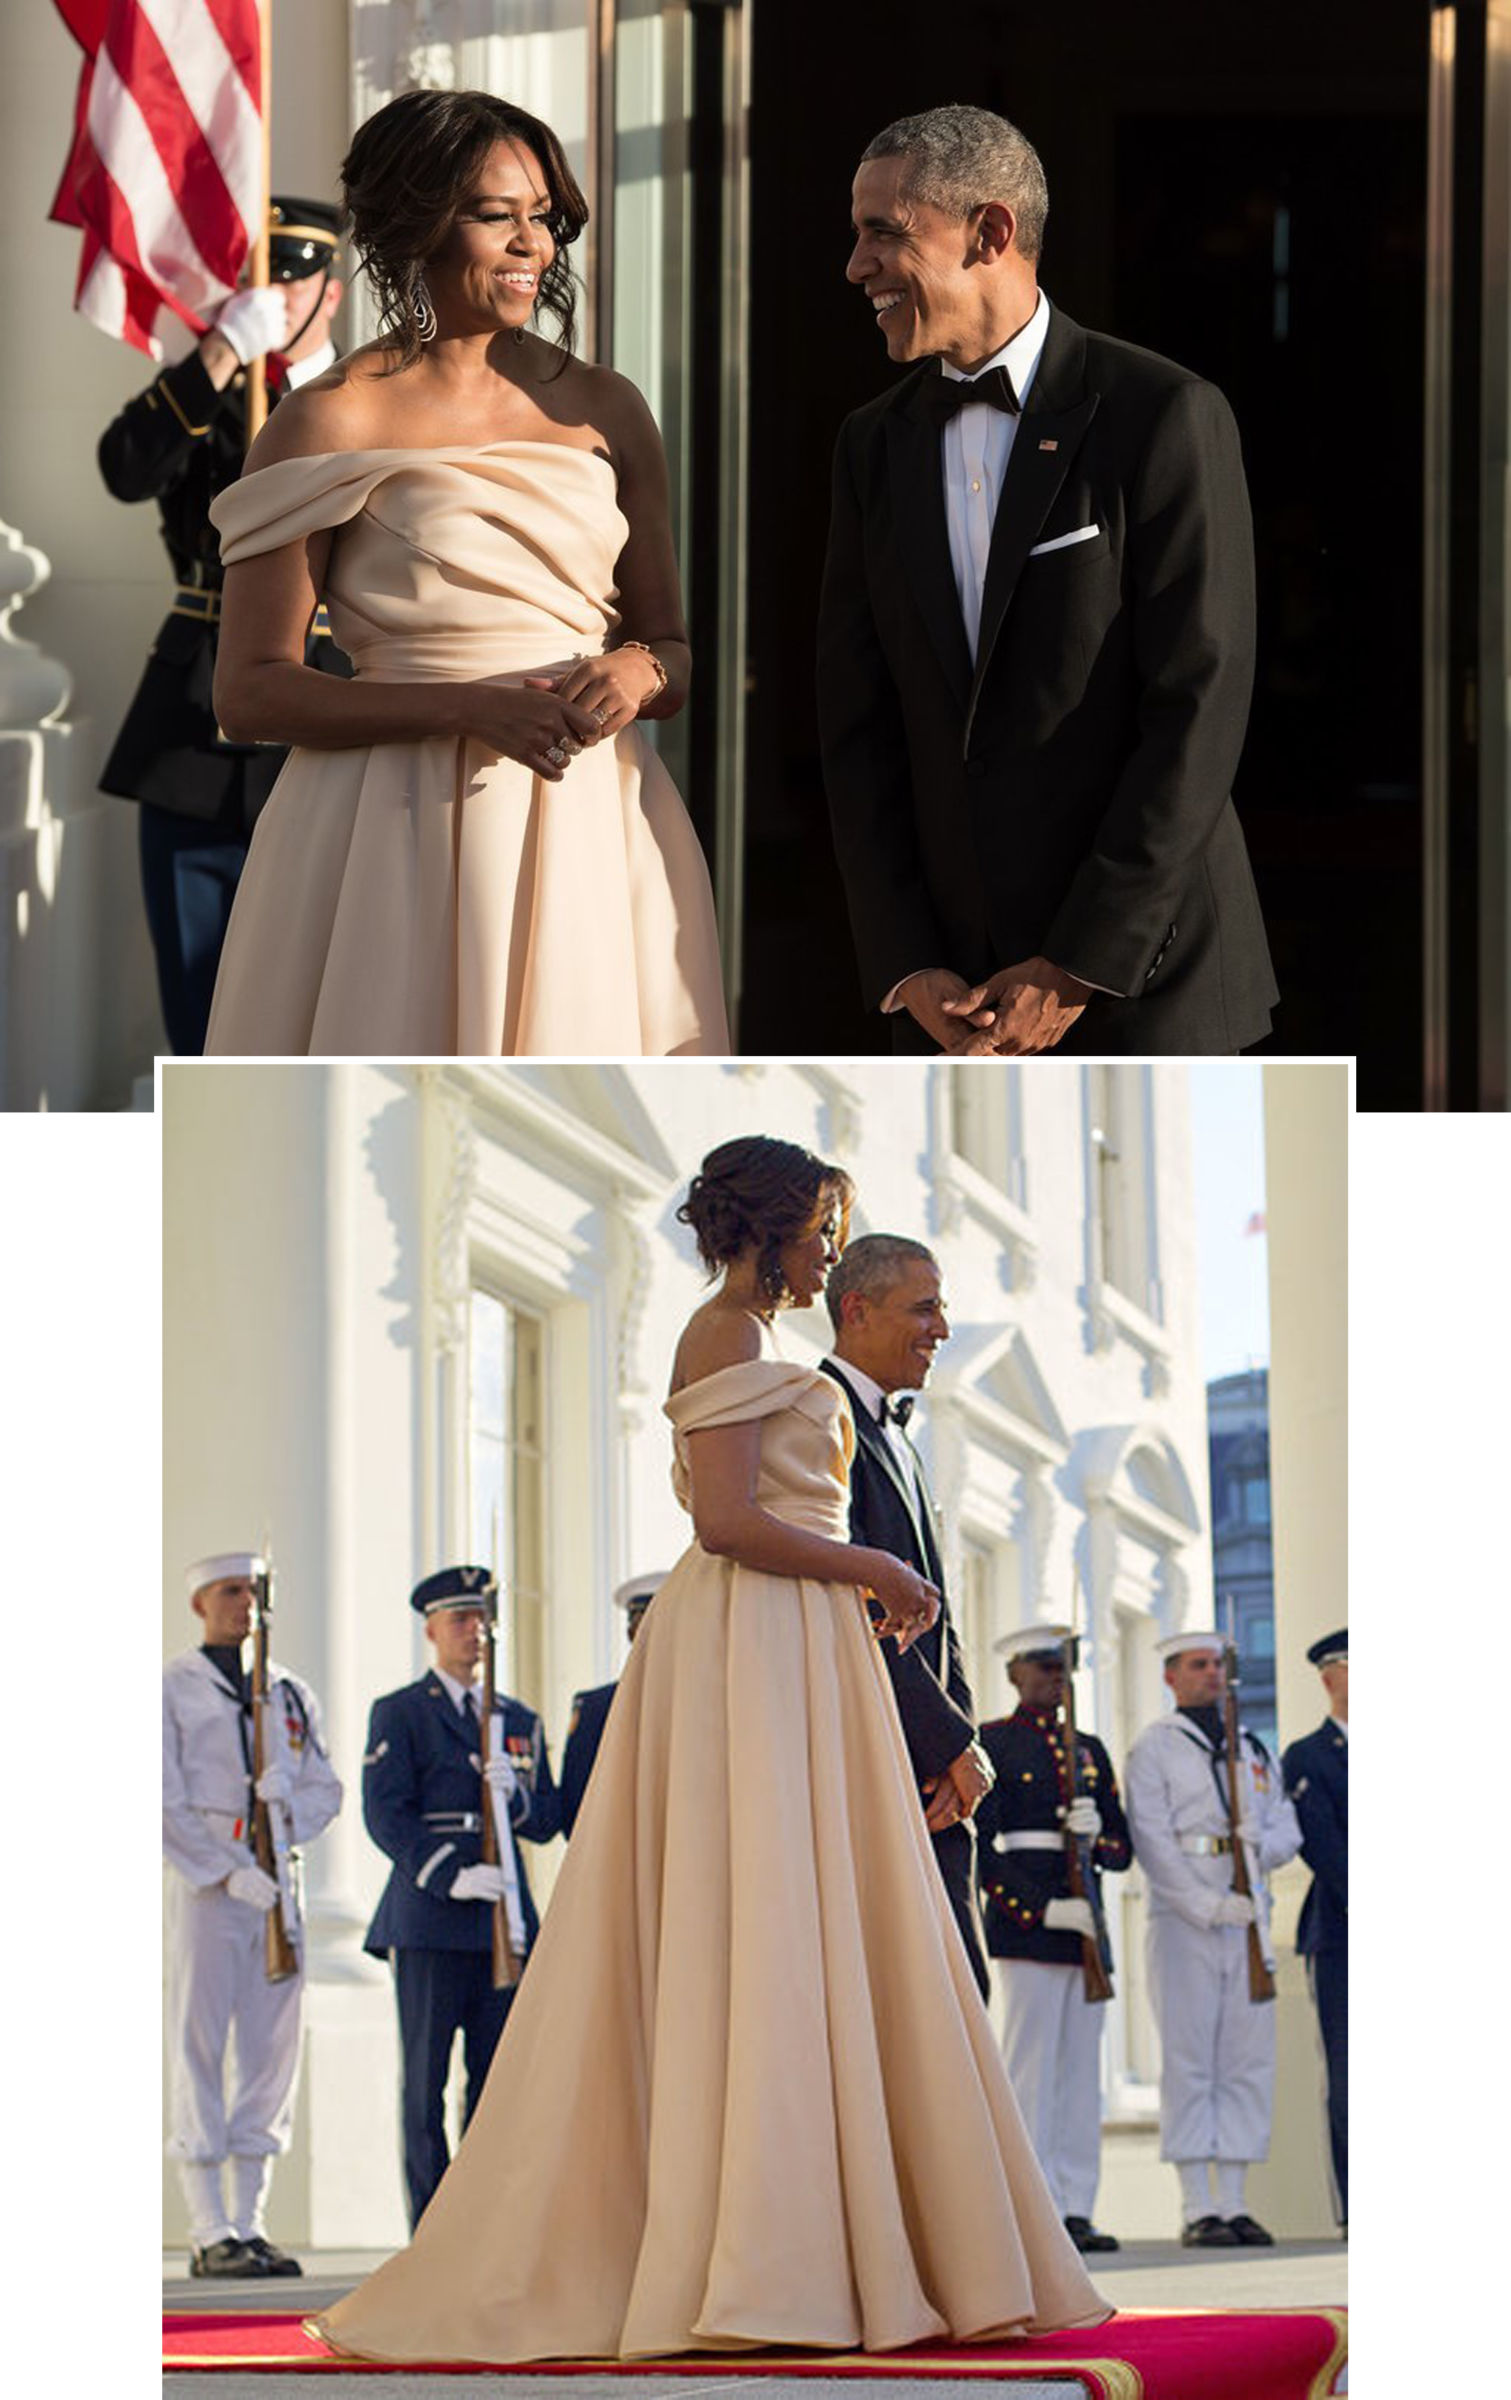 Michelle Obama Style